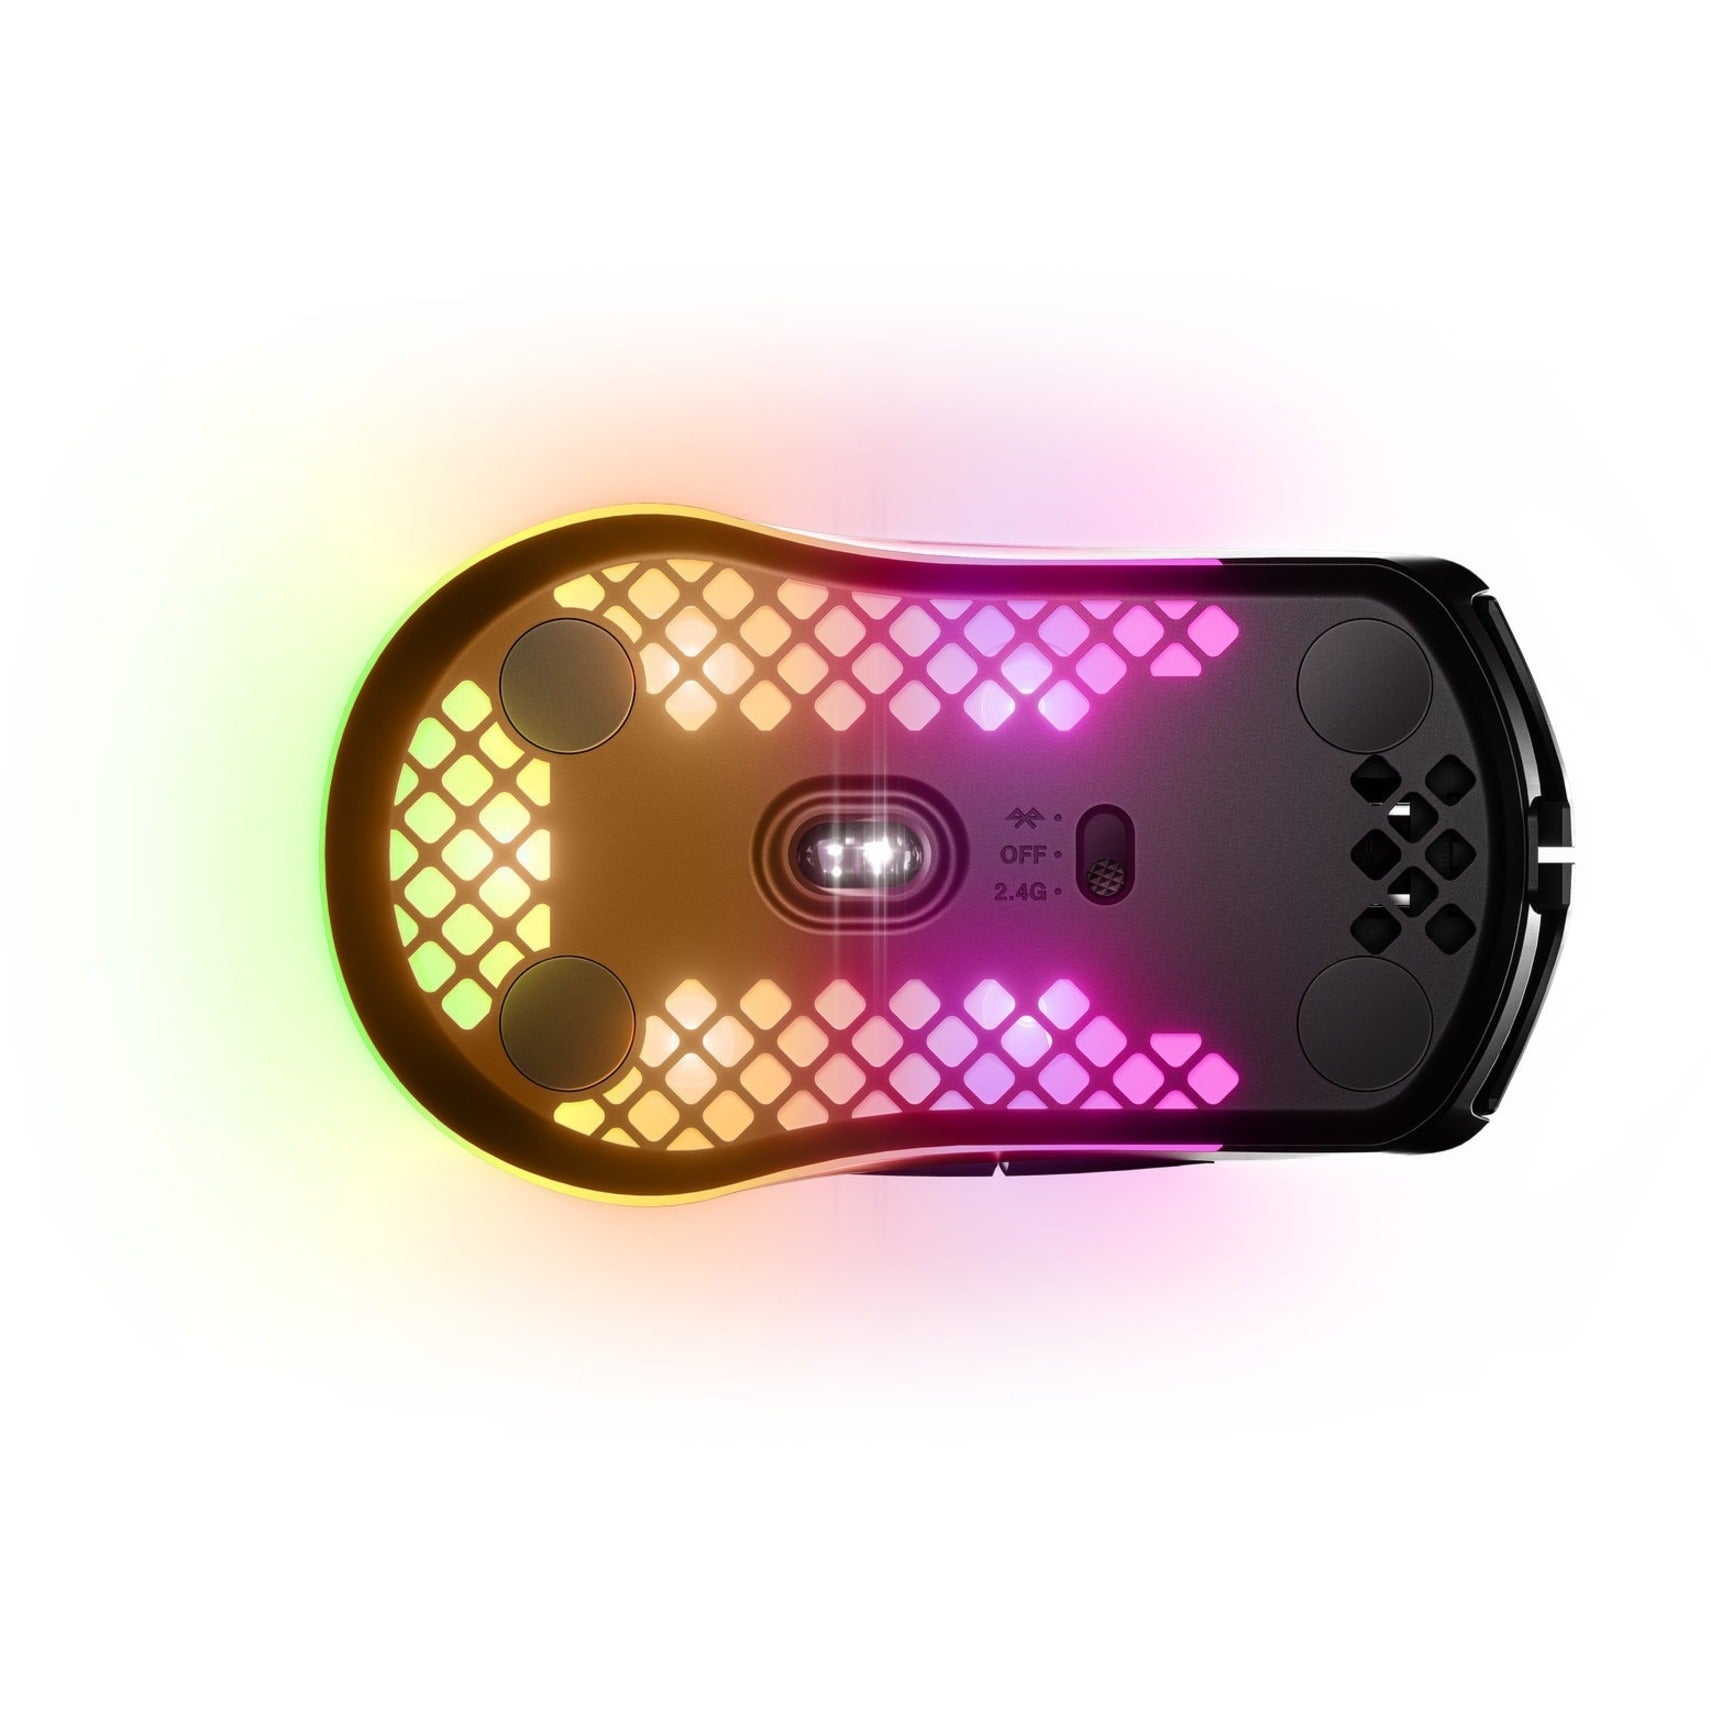 SteelSeries: ستيل سيريس   Aerox 3: أيروكس ٣   Wireless: لاسلكي   Gaming Mouse: فأر الألعاب   Rechargeable: قابل لإعادة الشحن   18000 dpi: 18000 نقطة في البوصة   Bluetooth 5: بلوتوث ٥   USB Type C: منفذ USB نوع C